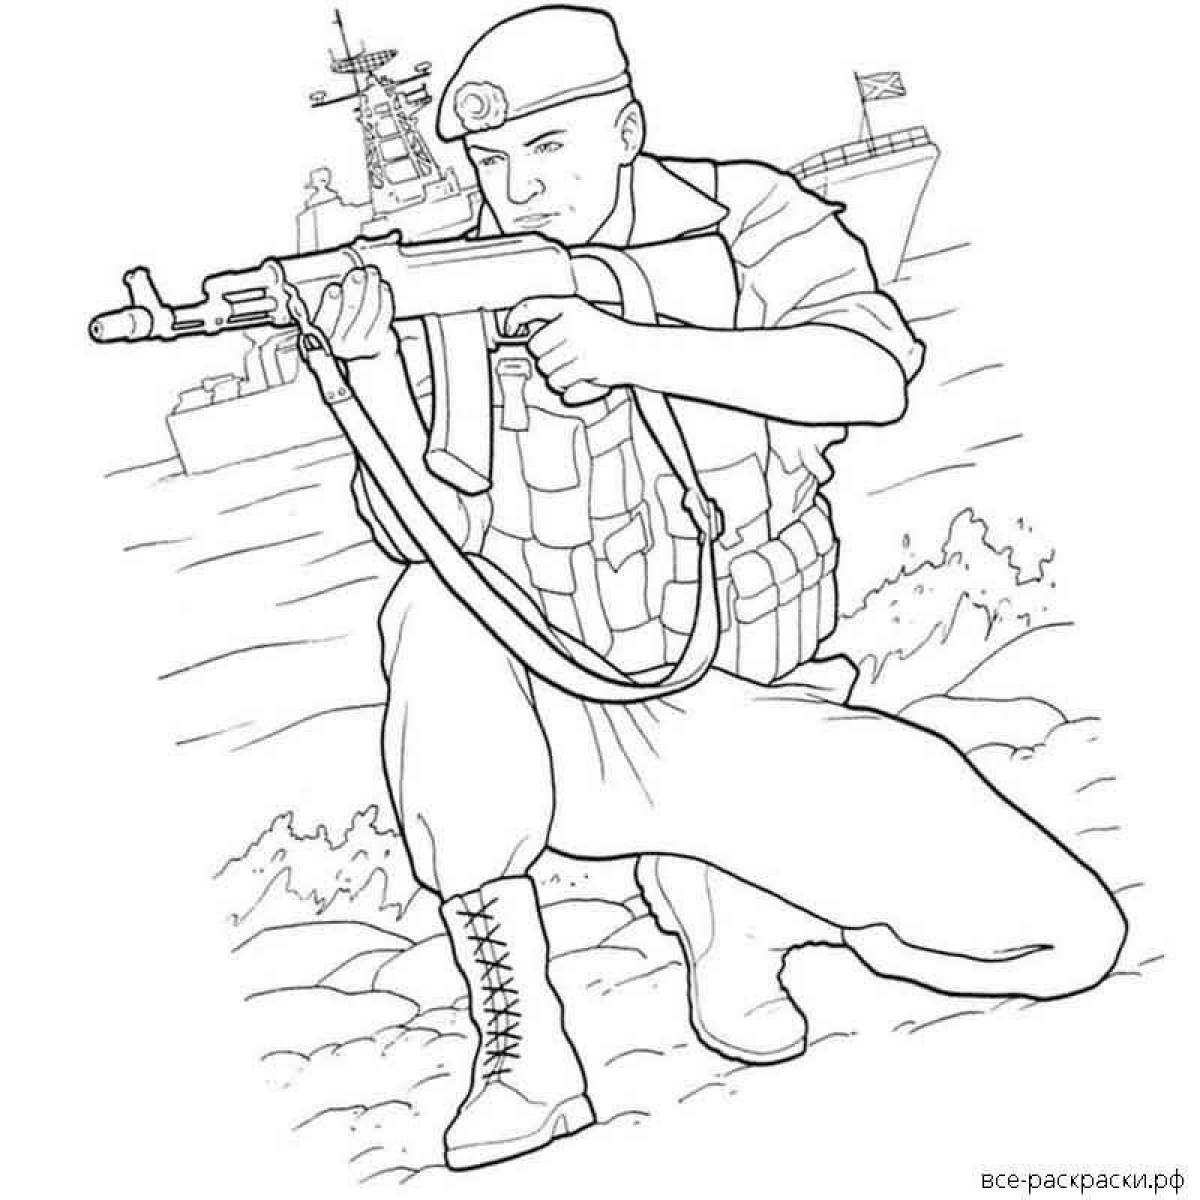 Invincible soldier coloring book